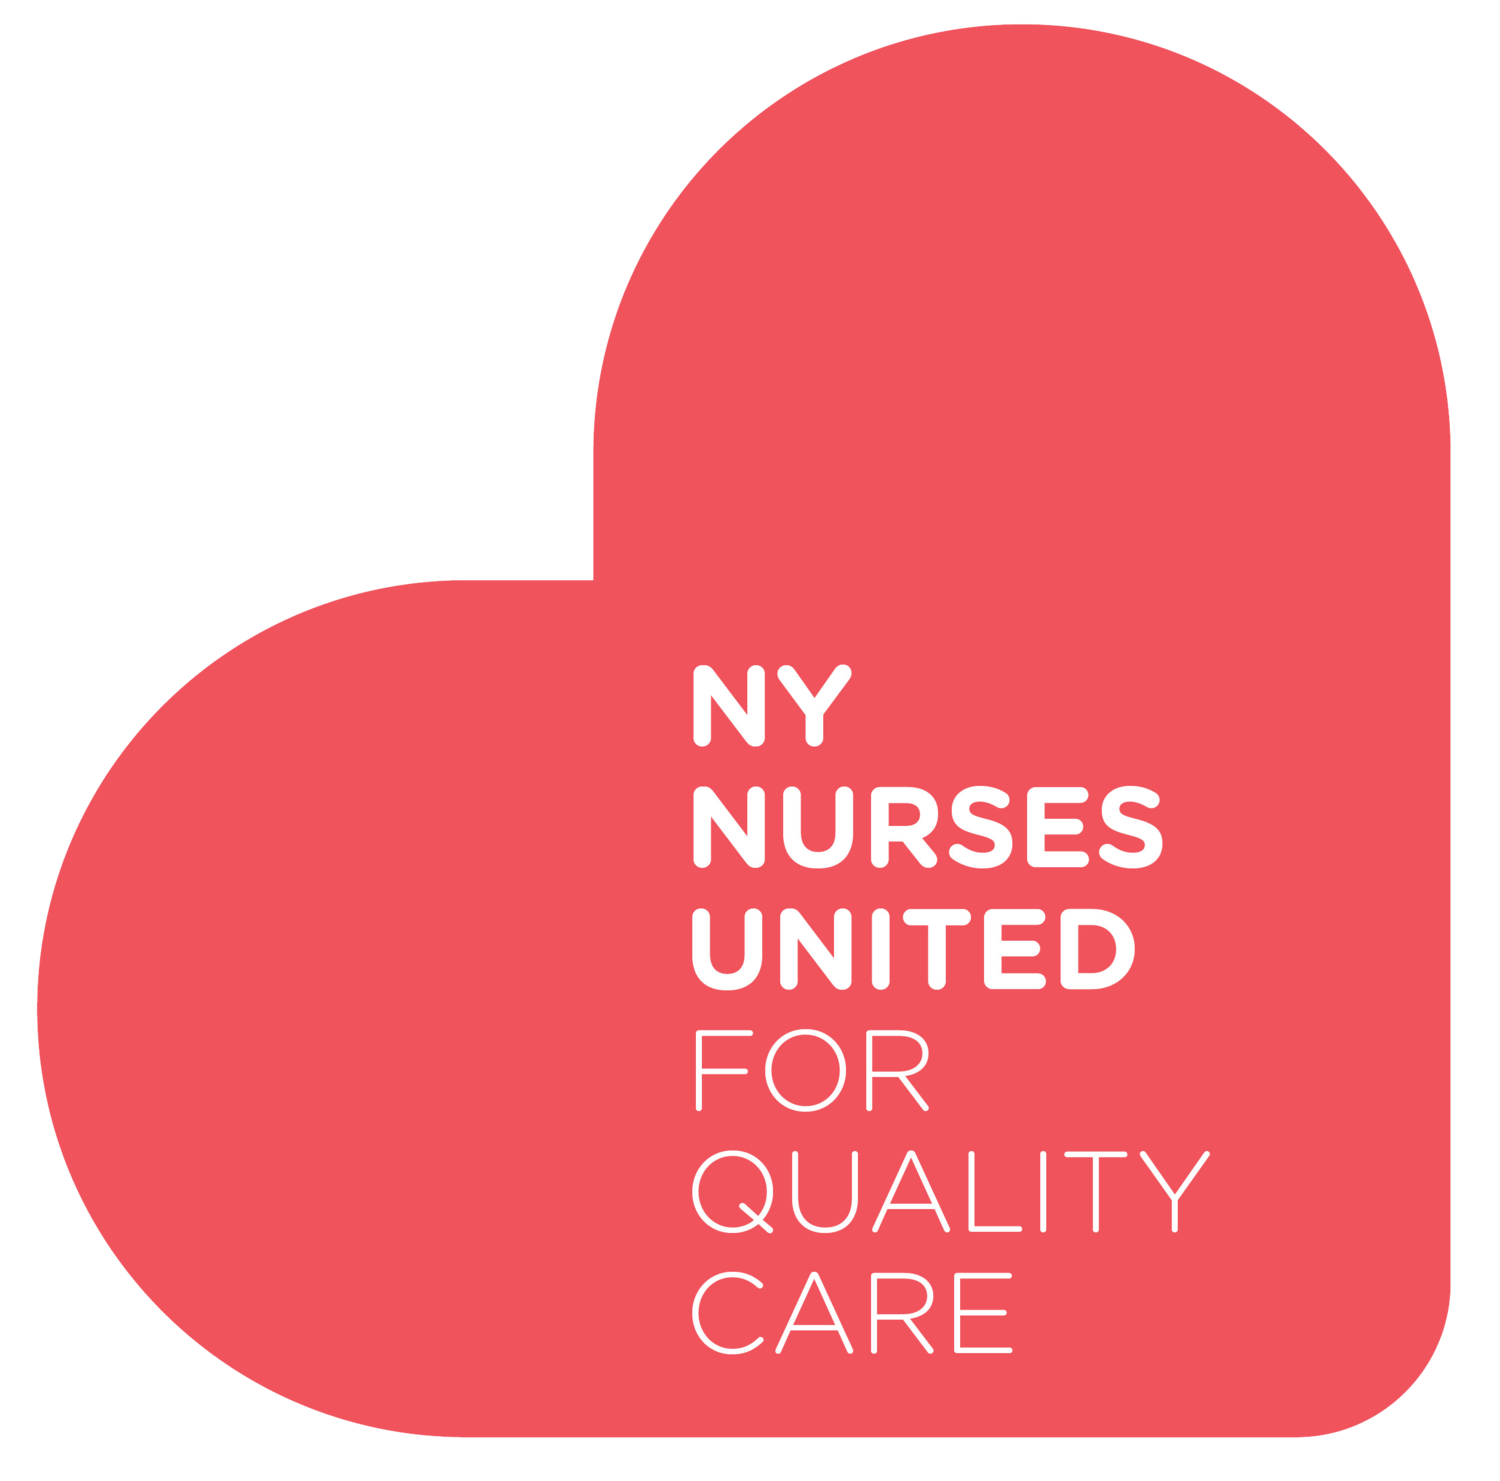 NY Nurses United for Quality Care